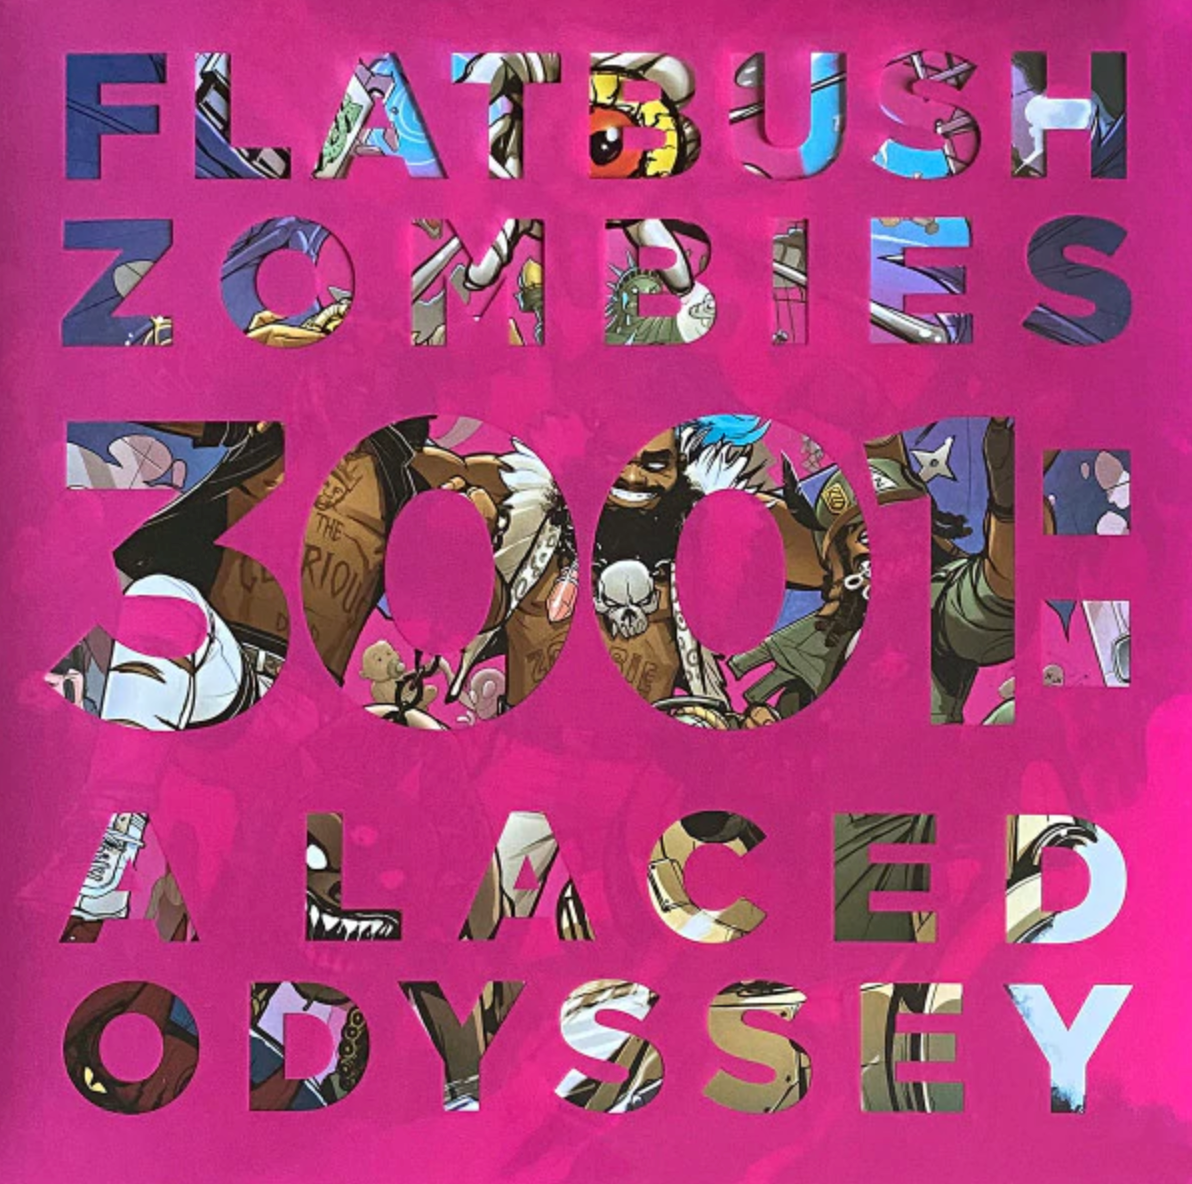 Flatbush Zombies - 3001: A Laced Odyssey